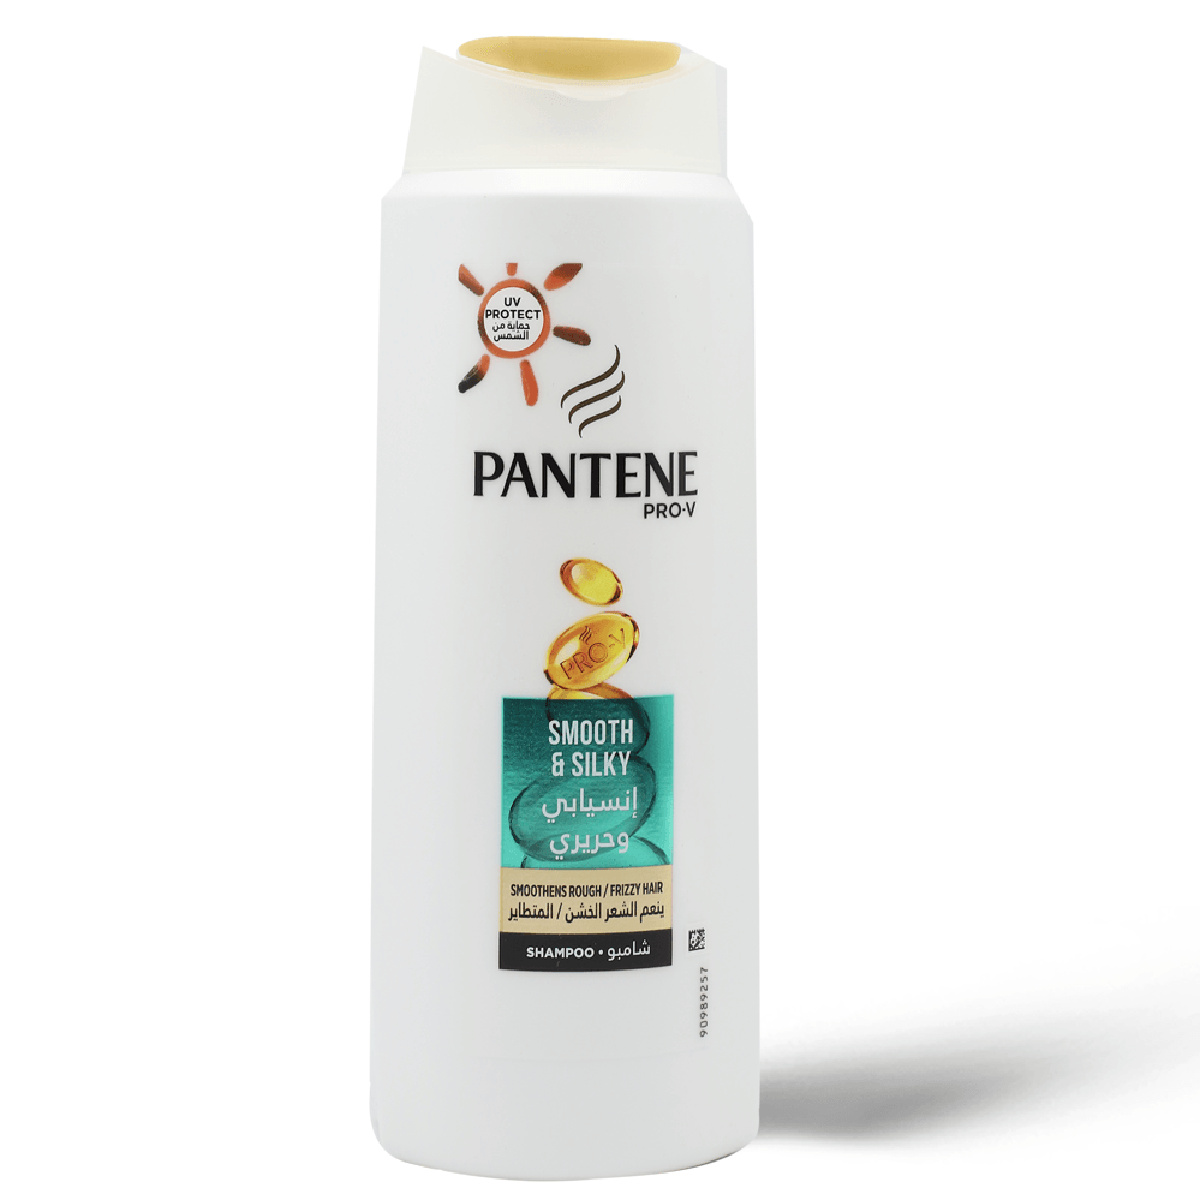 Pantene shampoo smooth silky 600ml - 0002163